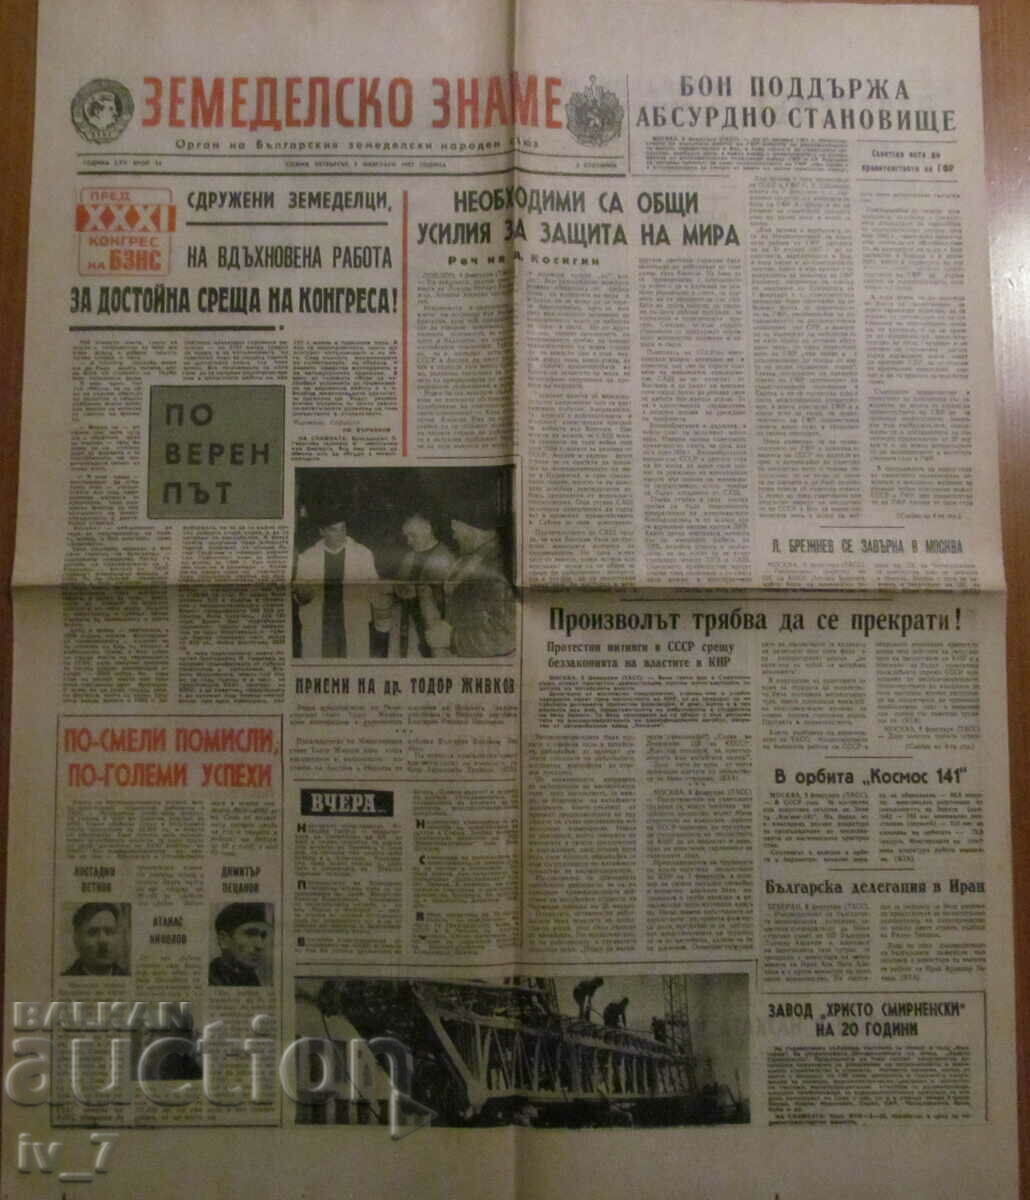 Newspaper "AGRICULTURAL FLAG" - February 9, 1967